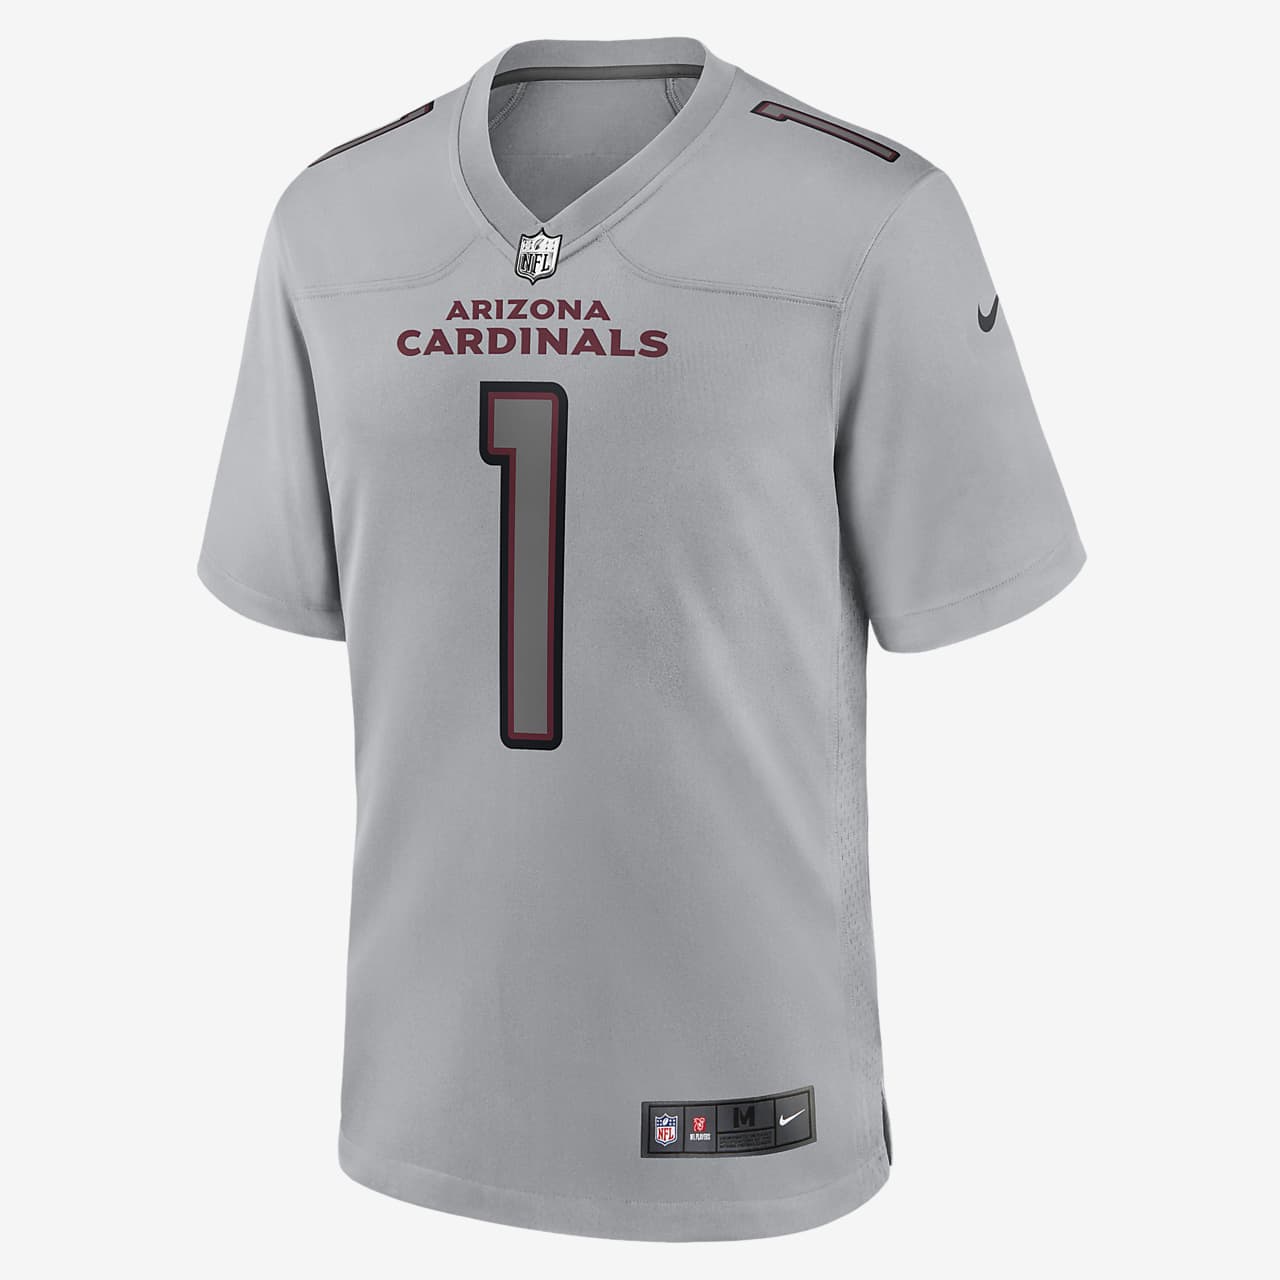 NFL Arizona Cardinals Atmosphere (Kyler Murray) Men's Fashion Football Jersey